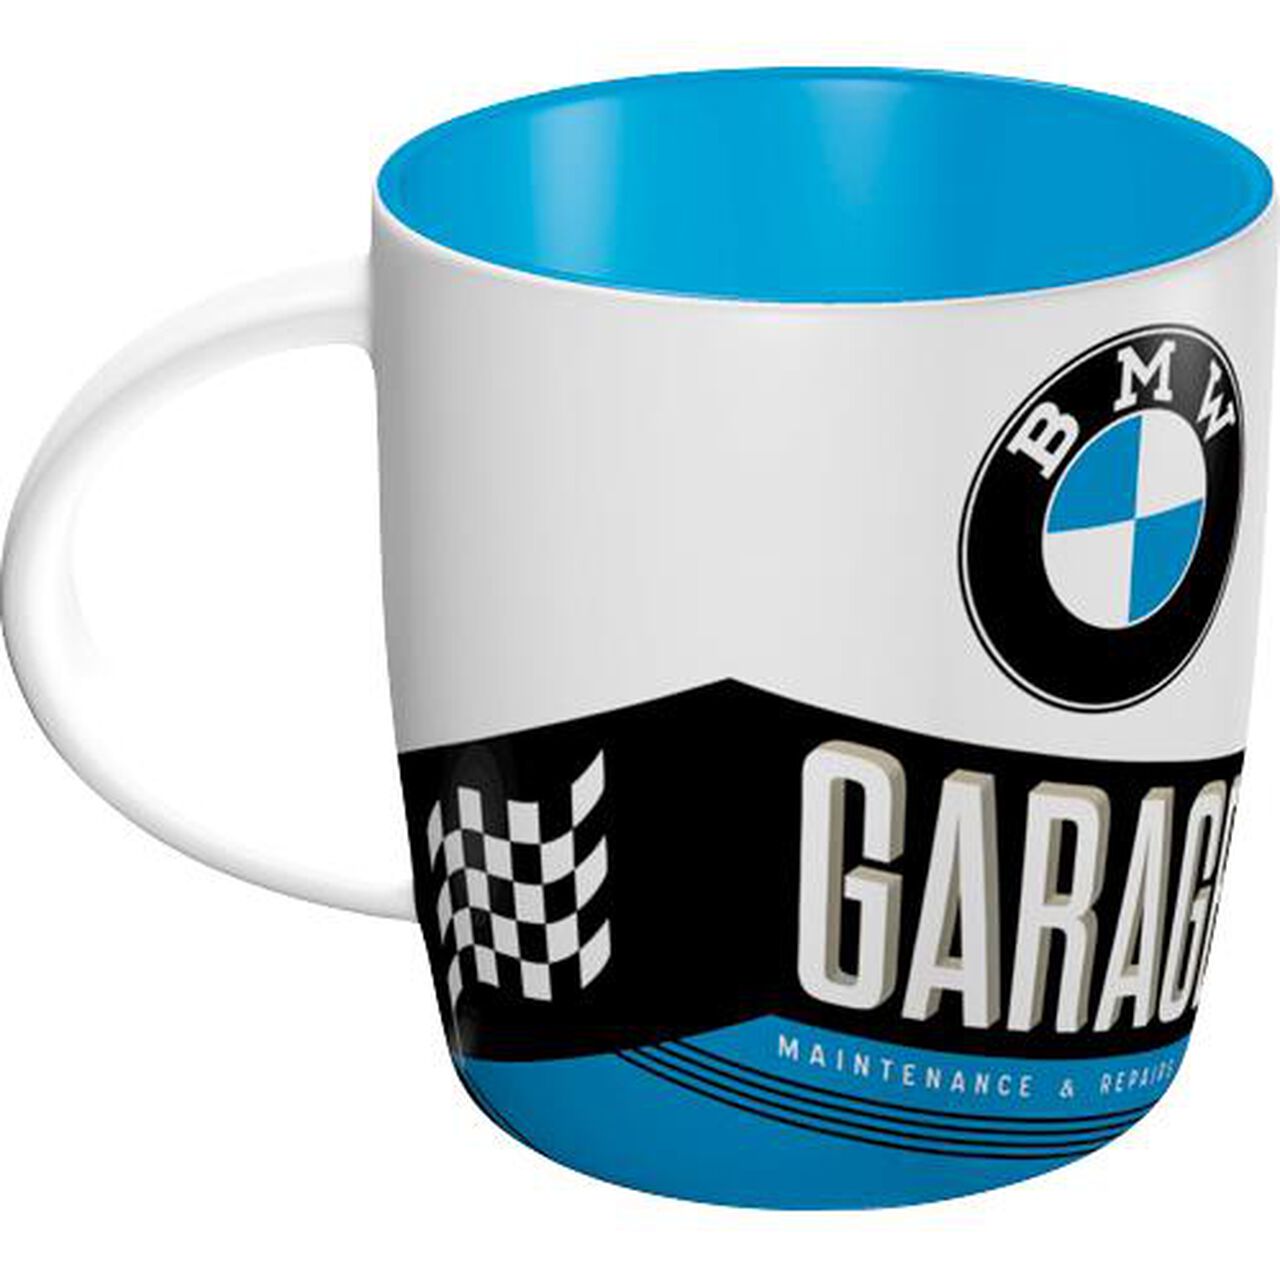  Nostalgic-Art Retro Coffee Mug, BMW – Garage – Gift idea for  car accessories fans, Large Ceramic Cup, Vintage Design, 11.2 oz : Home &  Kitchen